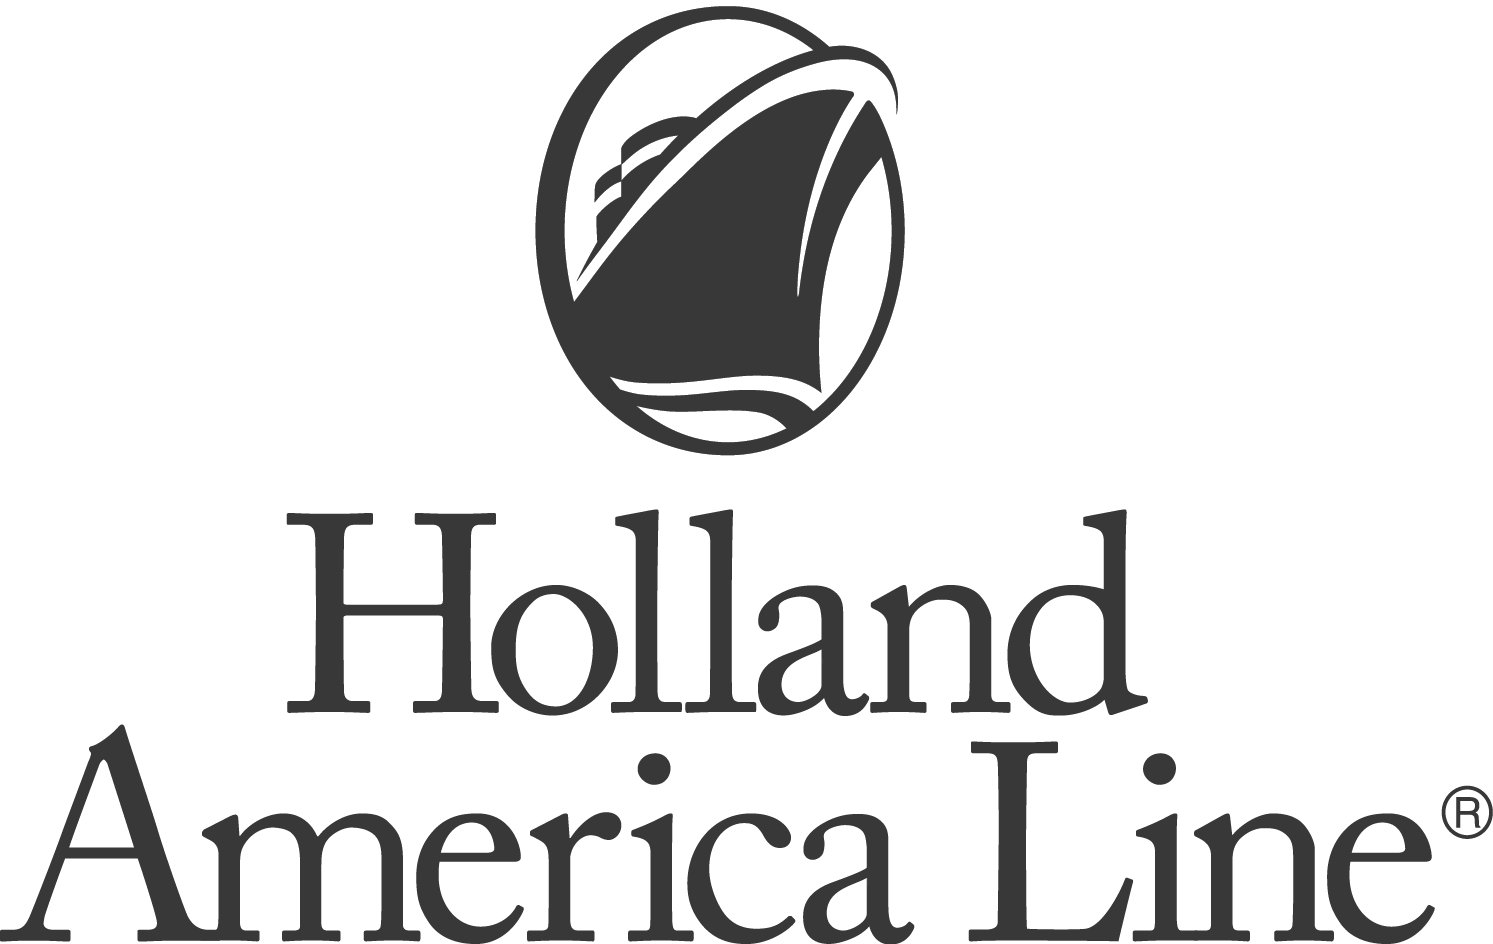 Holland America Line Cruises